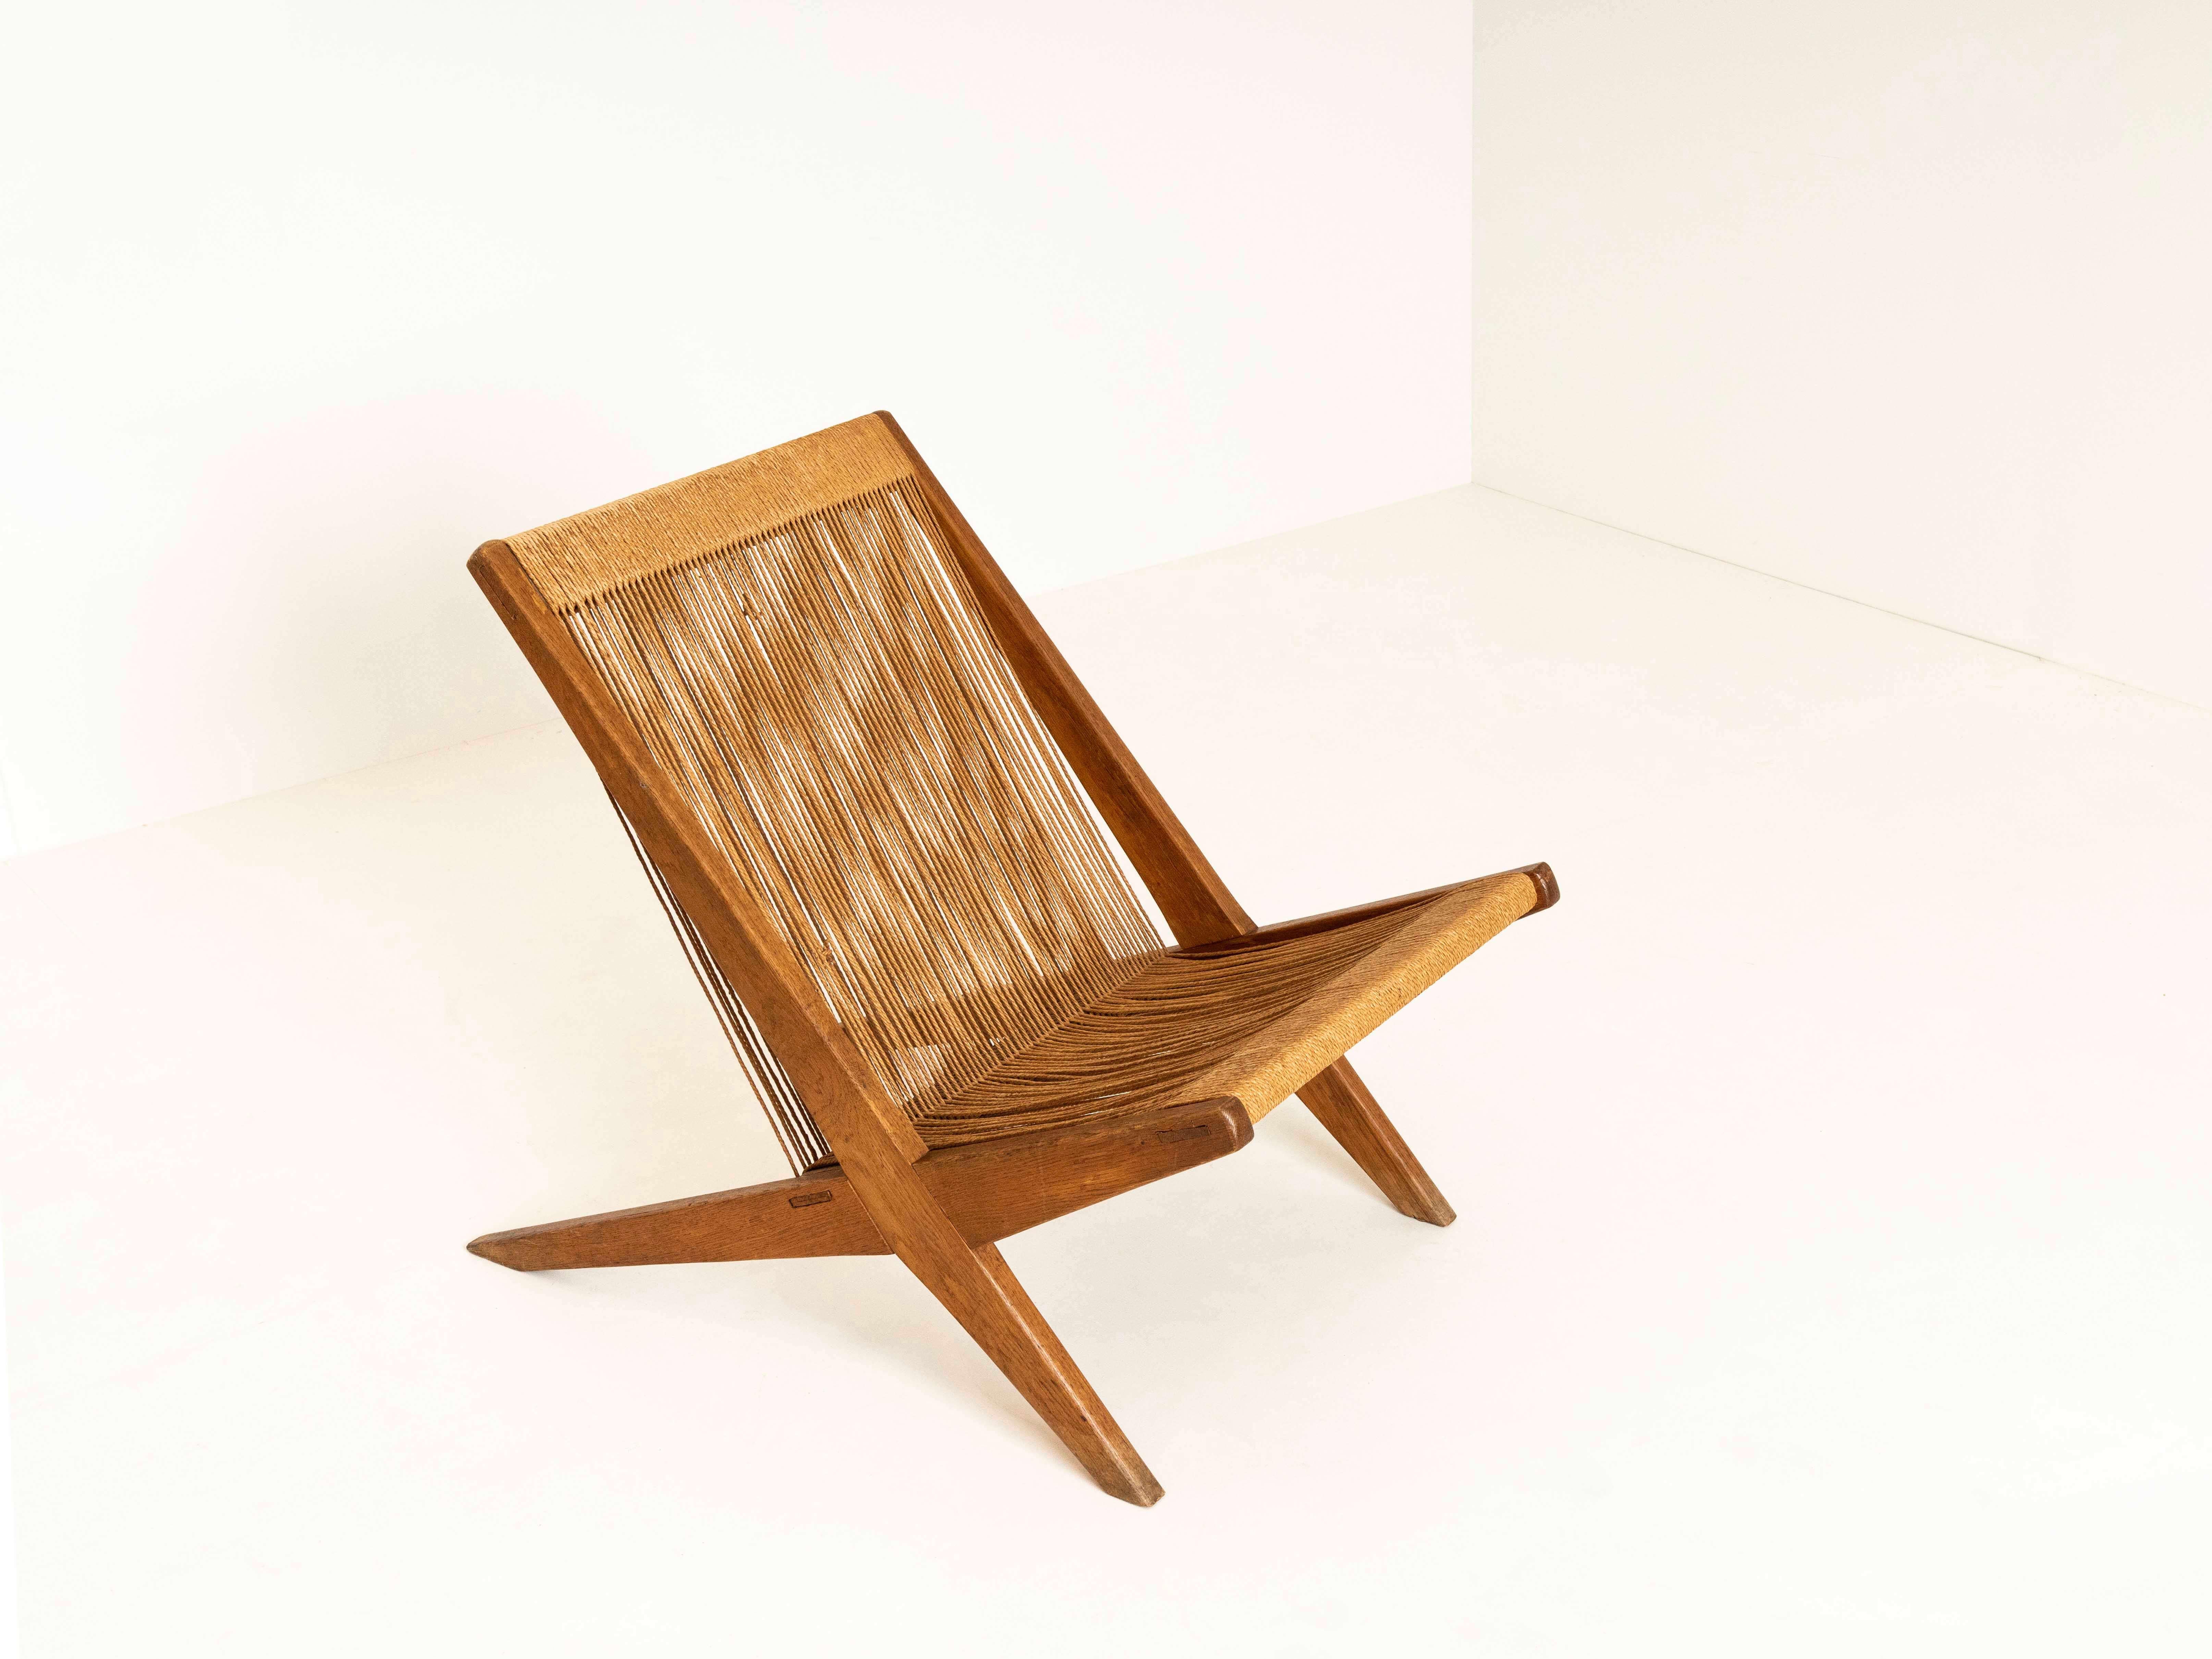 Scandinavian Modern 'Rope Chair' Attributed to Poul Kjaerholm and Jørgen Høj, Denmark, 1960s